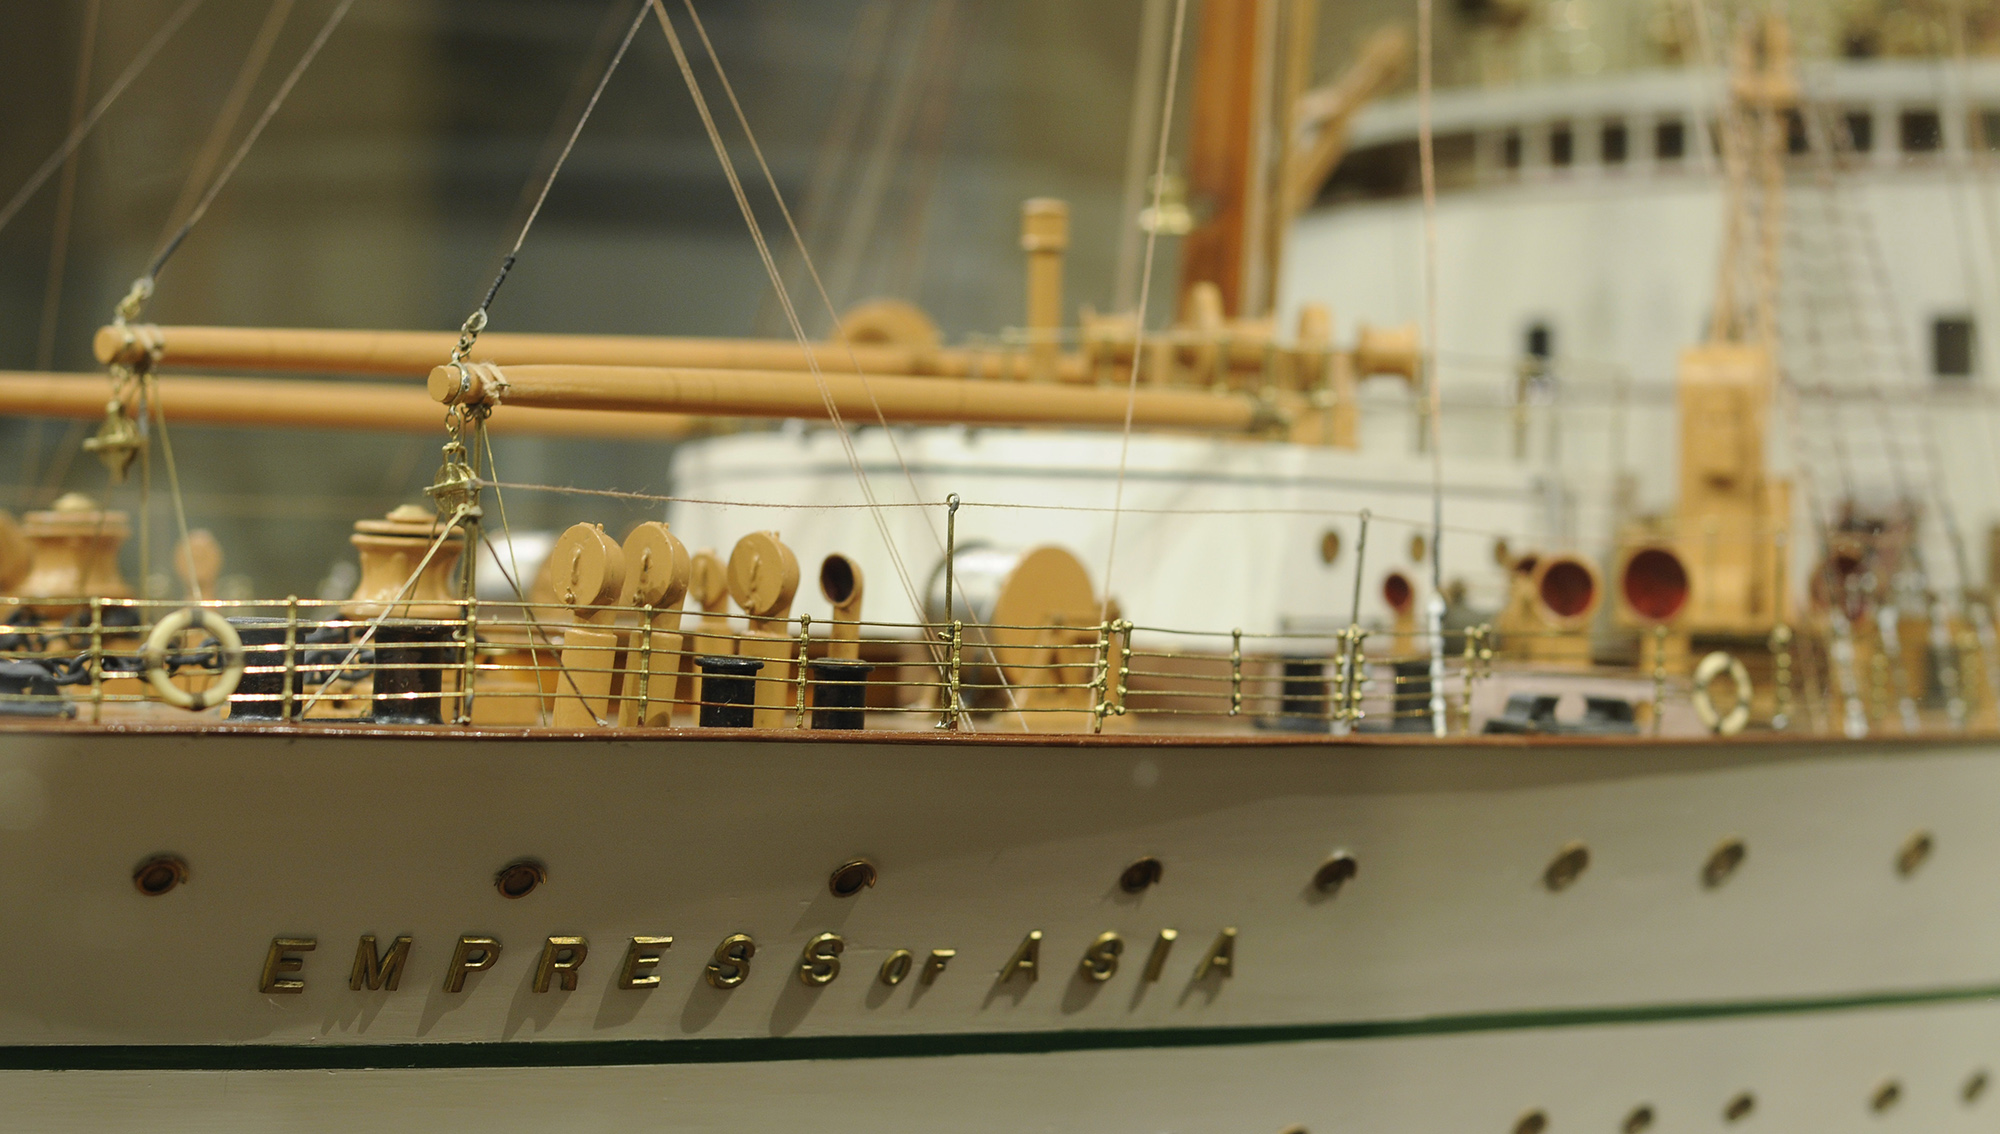 Empress of Asia model ship